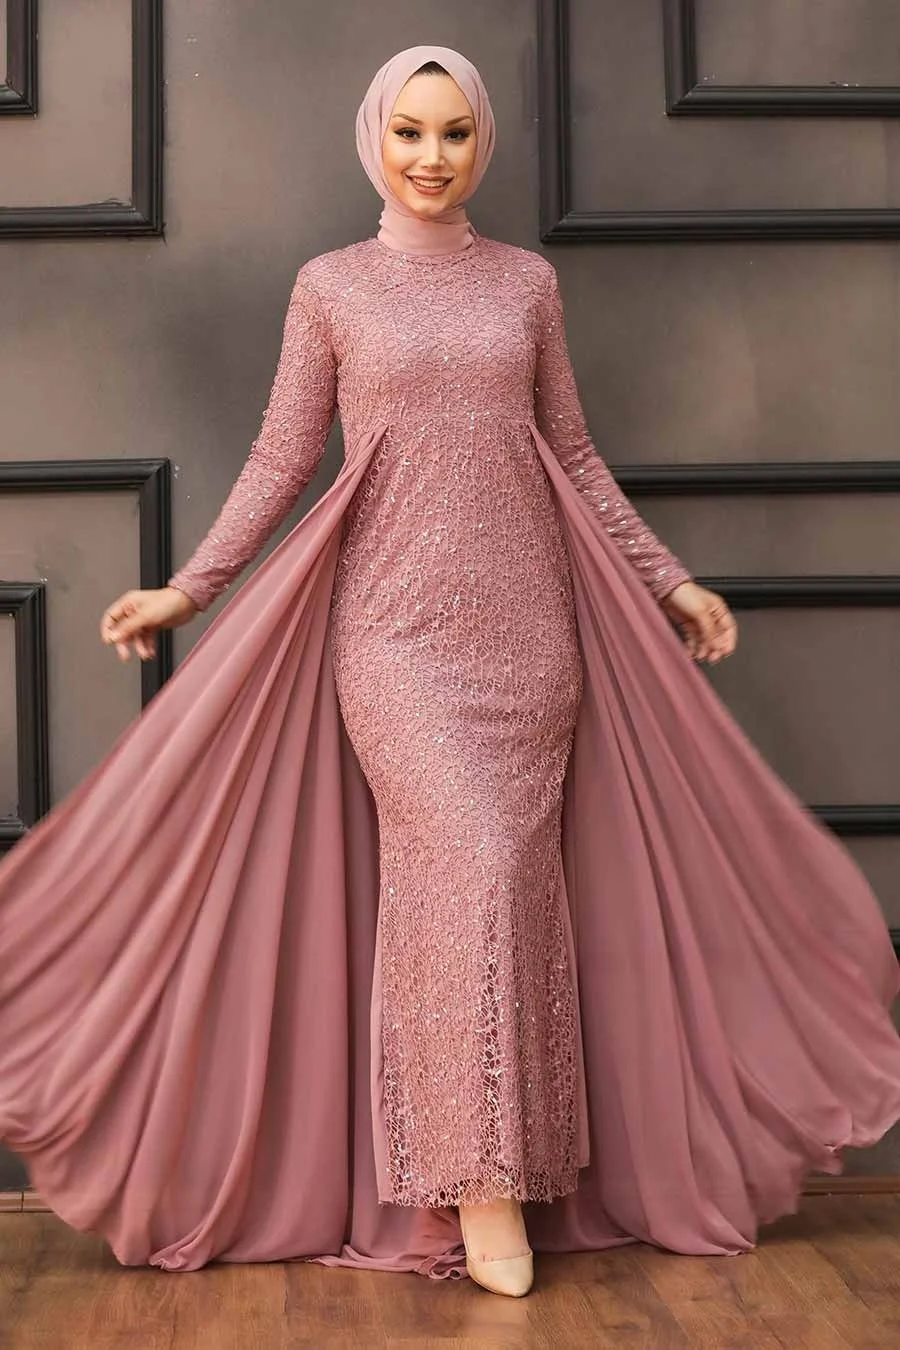 Women's evening dress sequin elegant and chiffon fabric sequins sequin hijab fashion elegant design evening dress Muslim fashion Islamic clothing